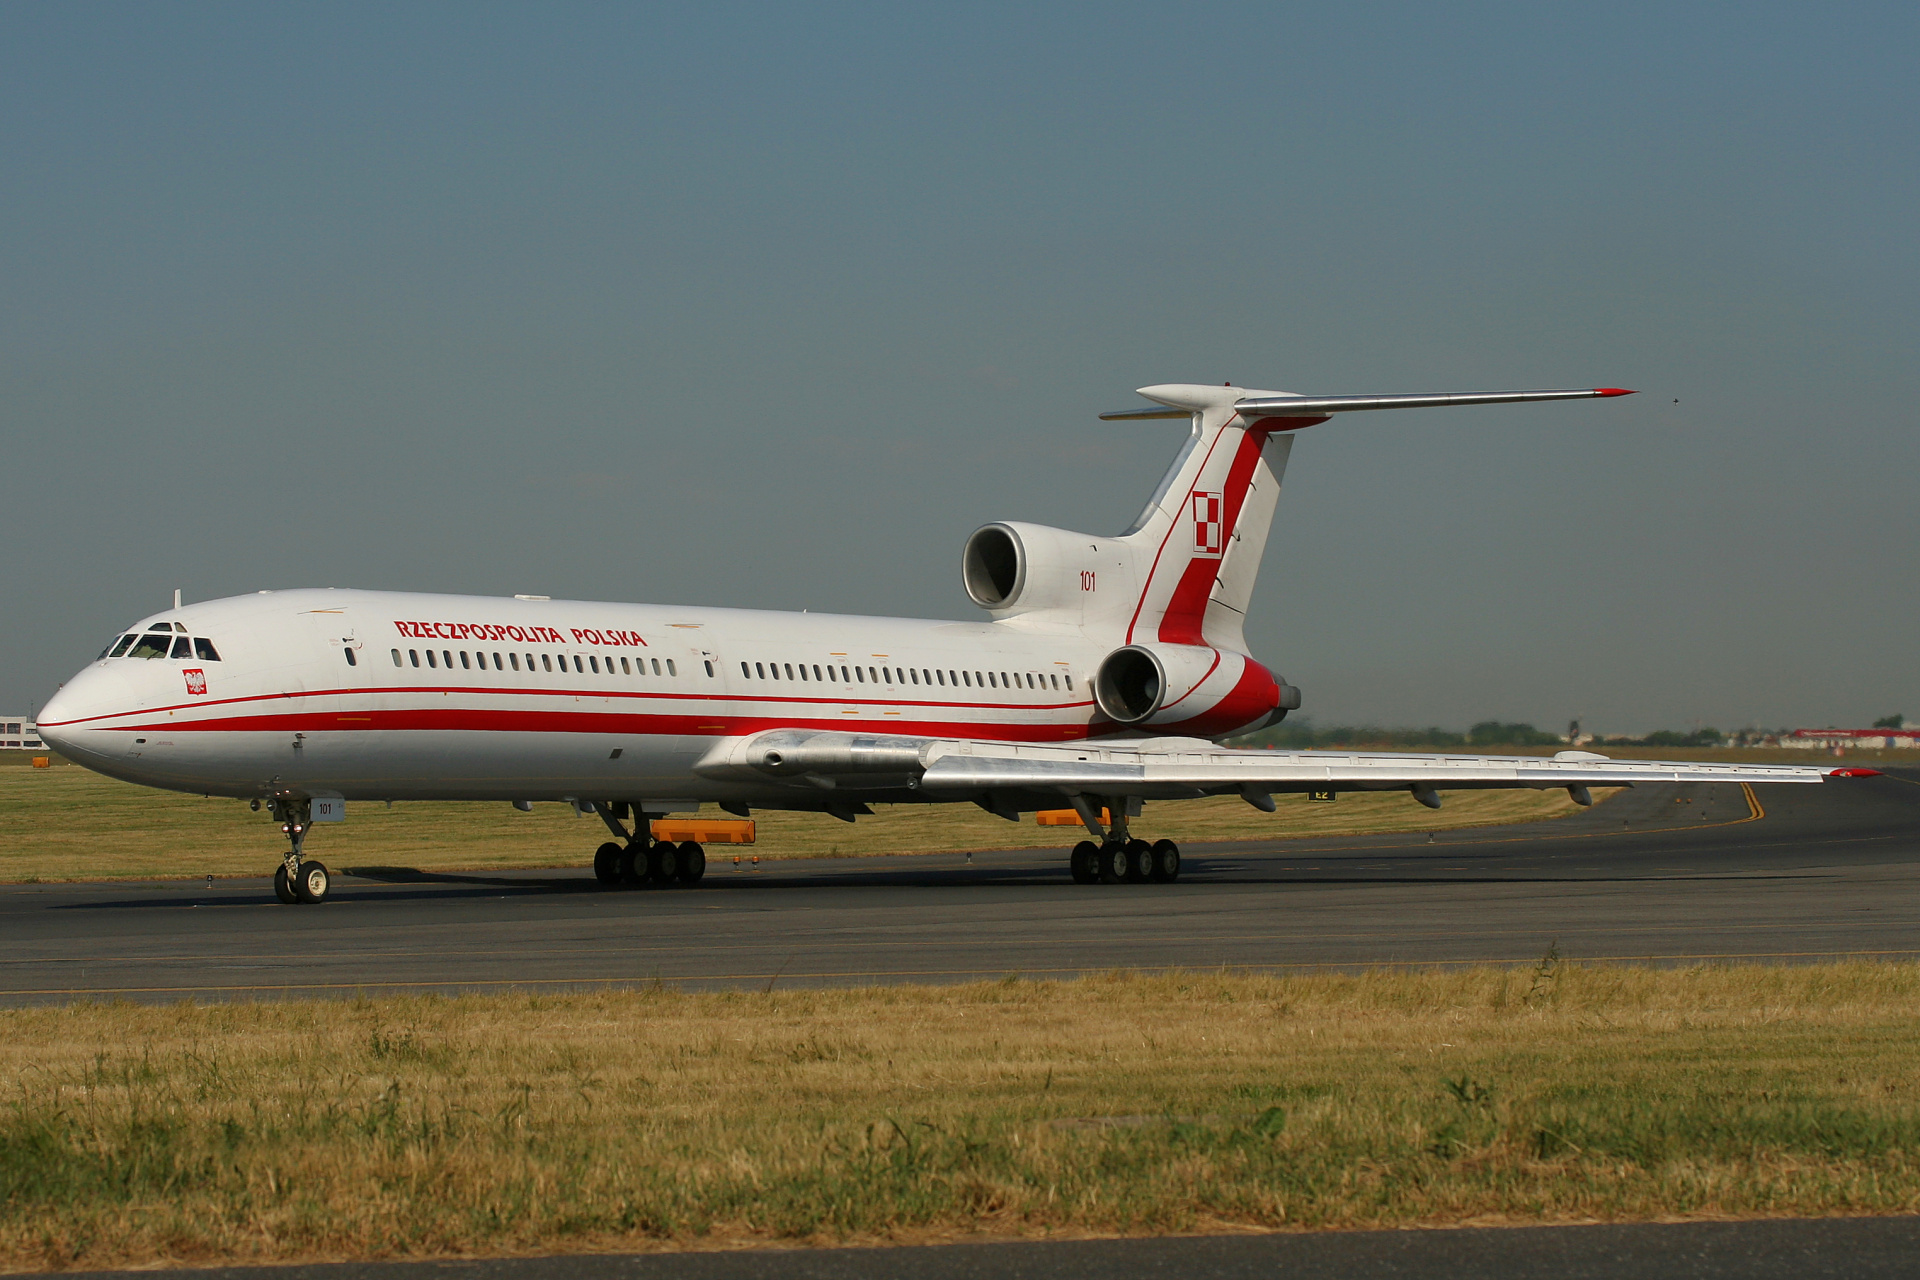 101 (Aircraft » EPWA Spotting » Tupolev Tu-154M » Polish Air Force)